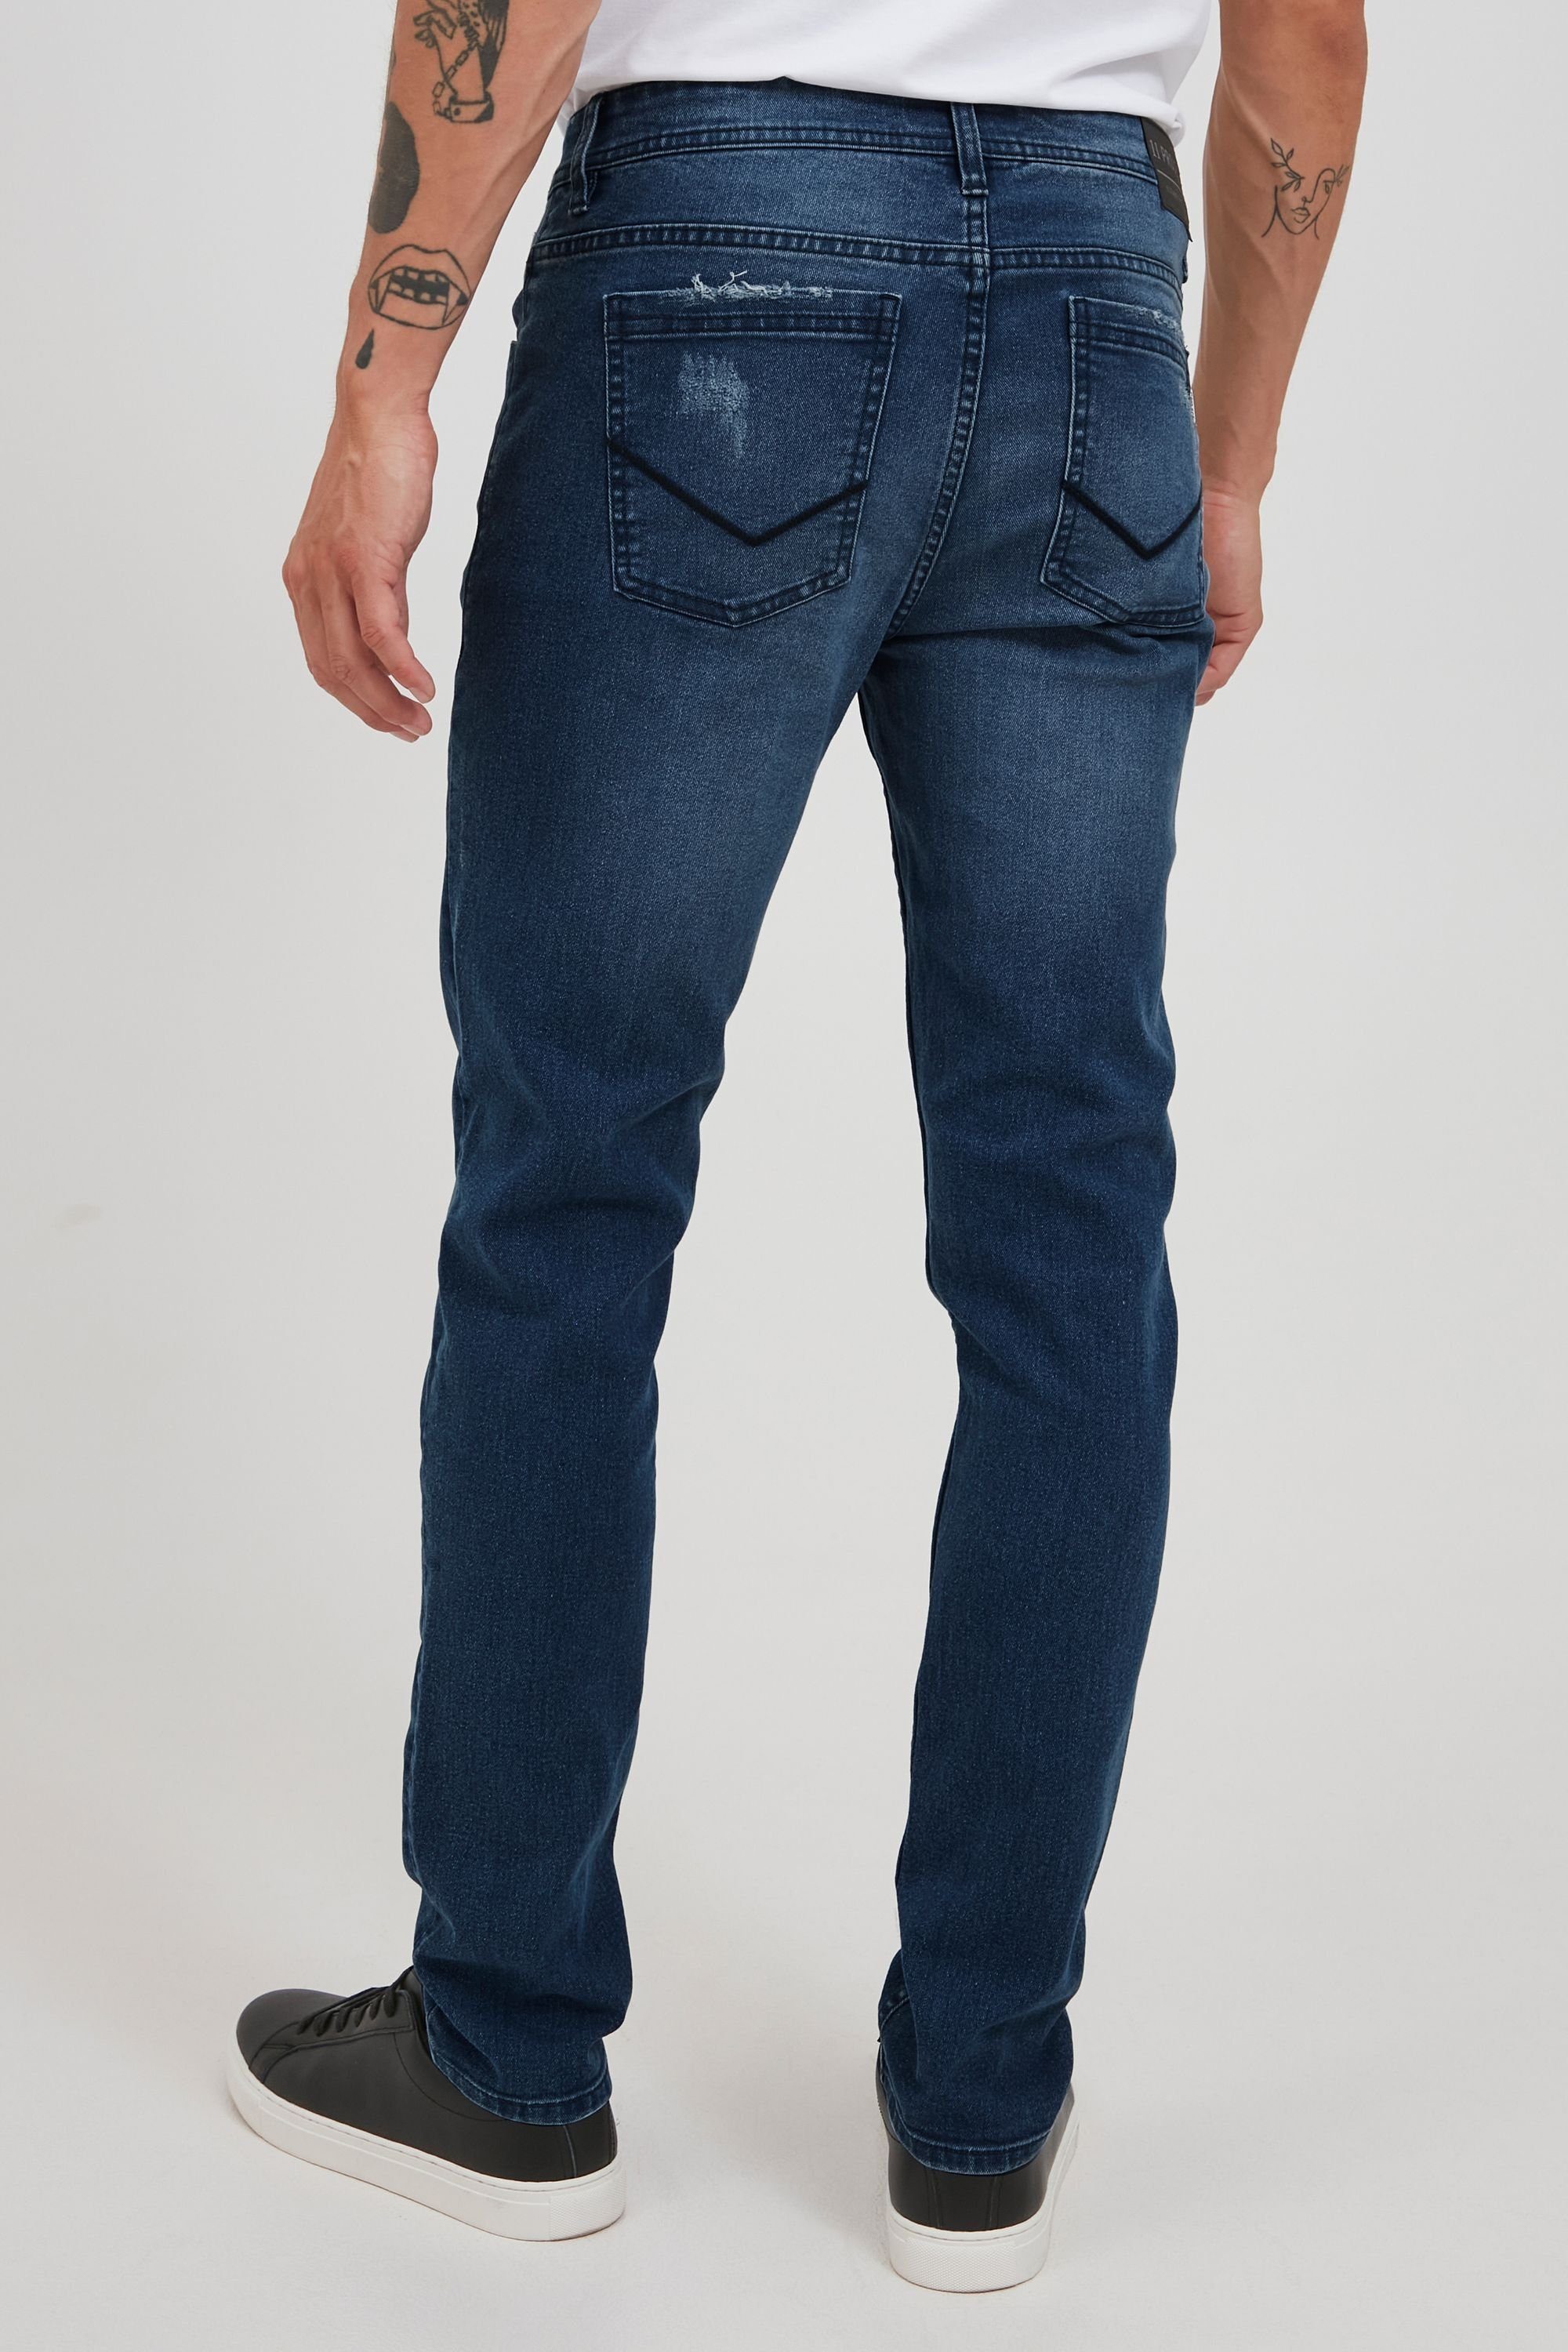 Denim Project PRPierino 11 blue 5-Pocket-Jeans Middle Project 11